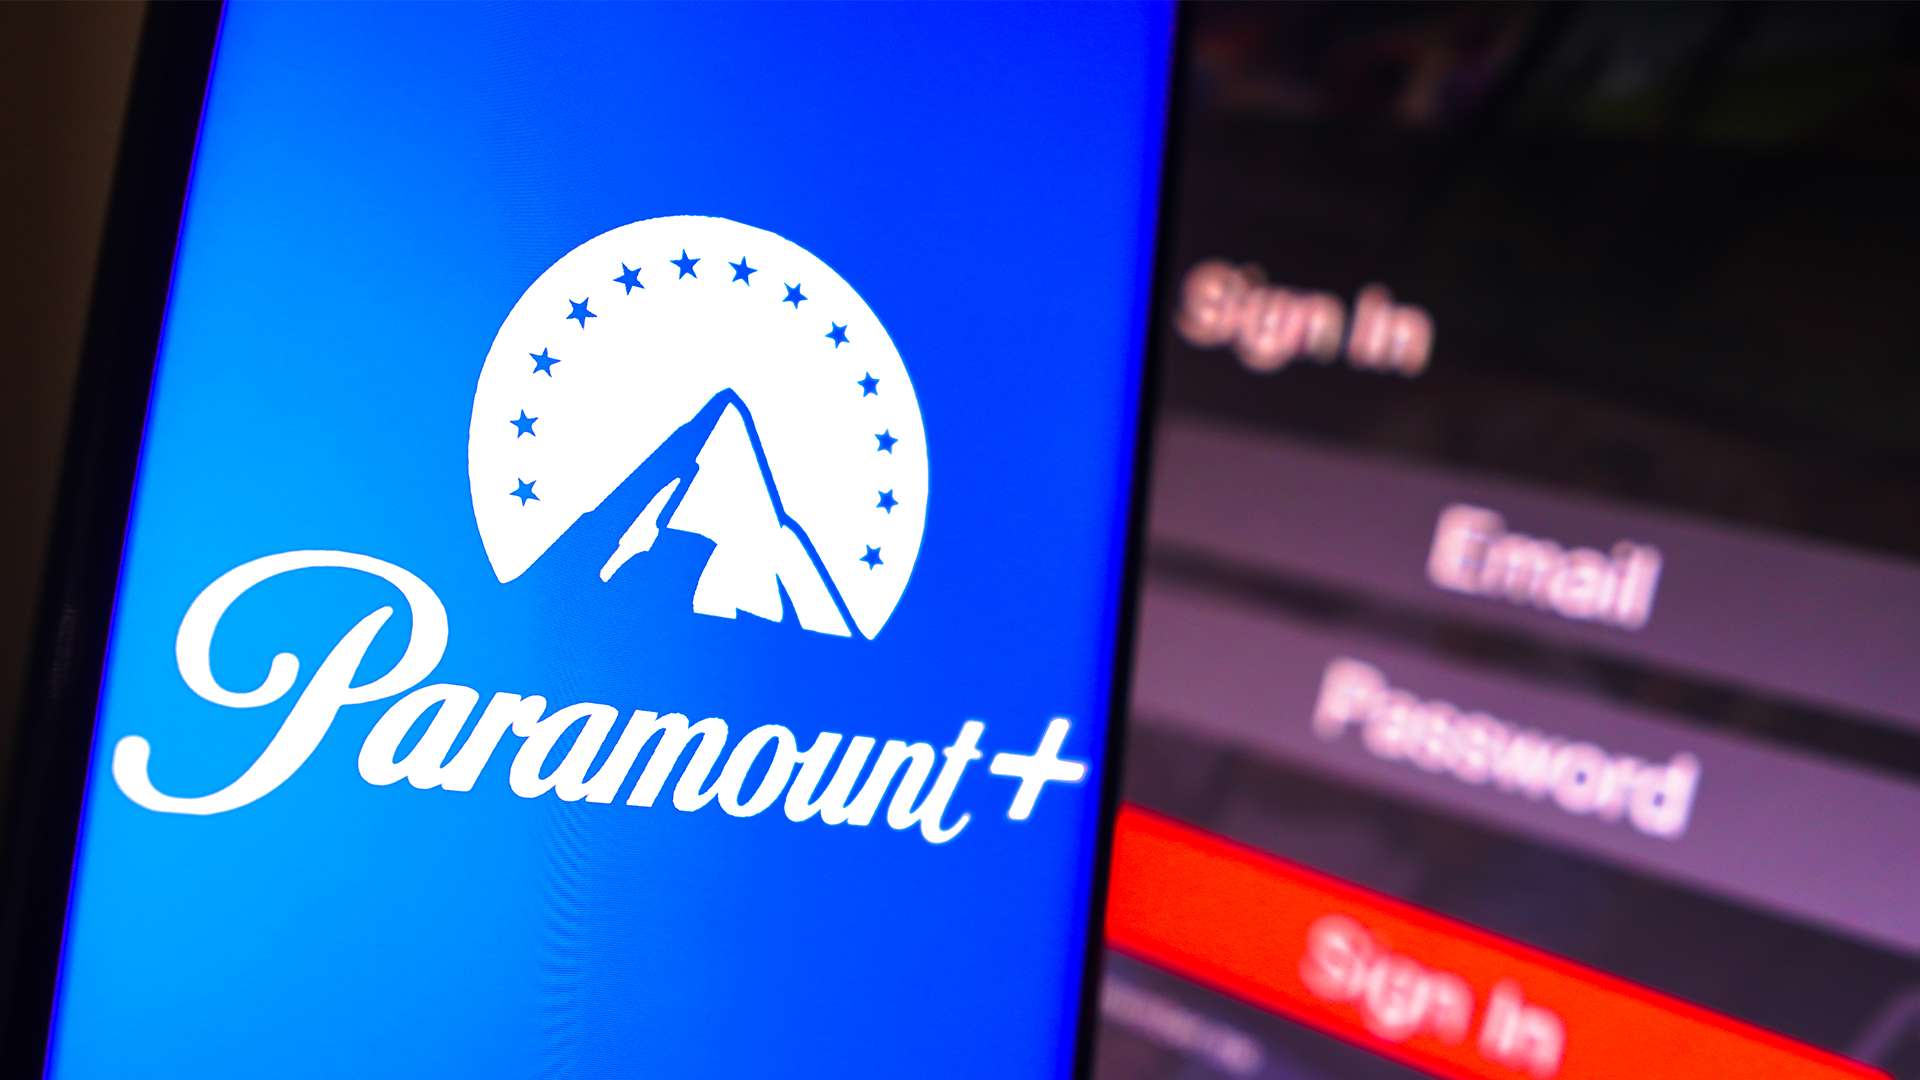 Paramount+ stream sports 